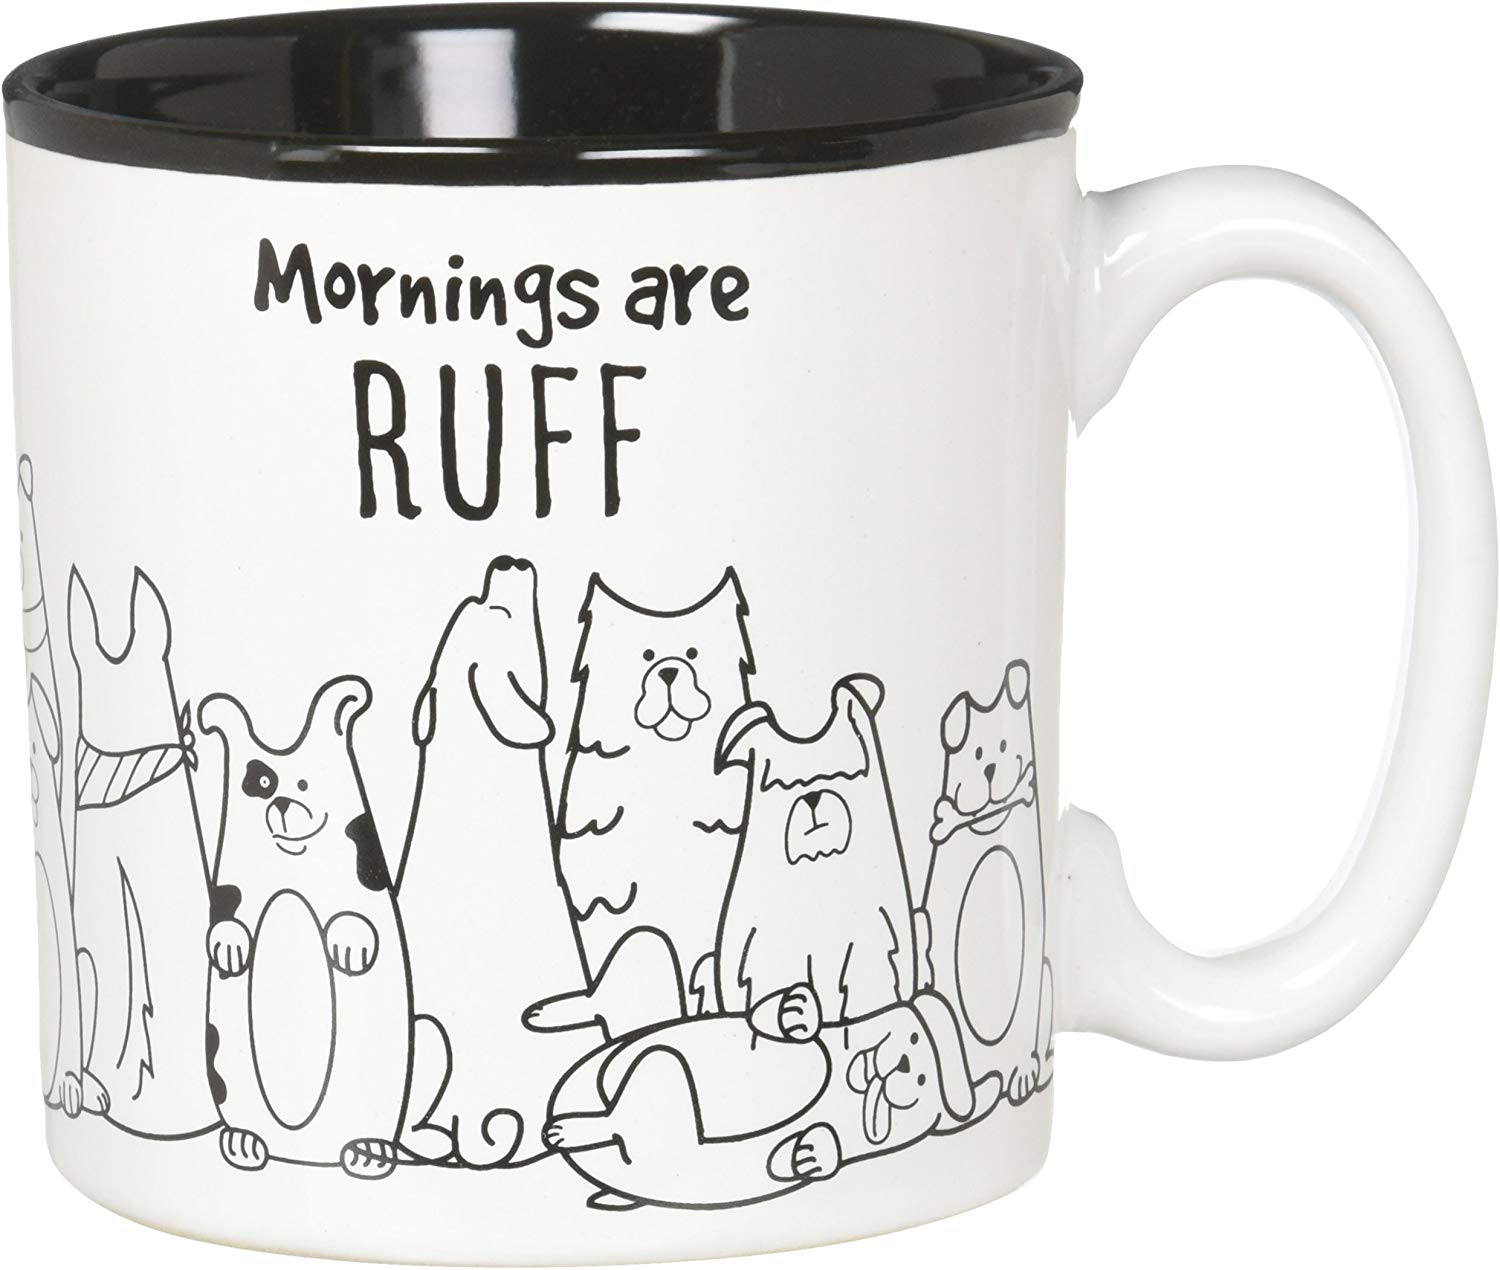 Mornings are Ruff Ceramic Coffee Mug